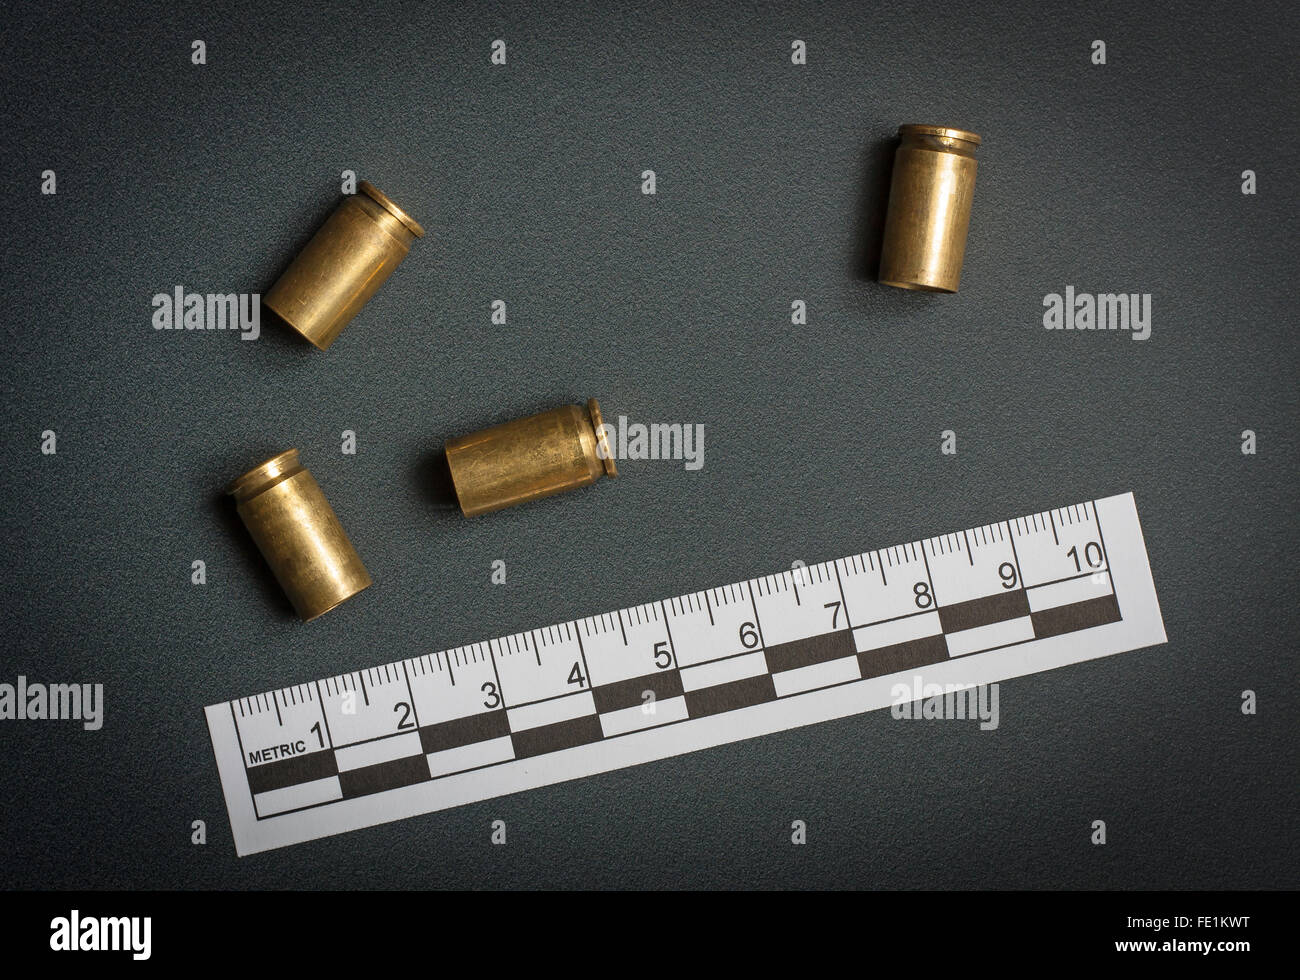 Crime scene, empty bullets casings on ground Stock Photo